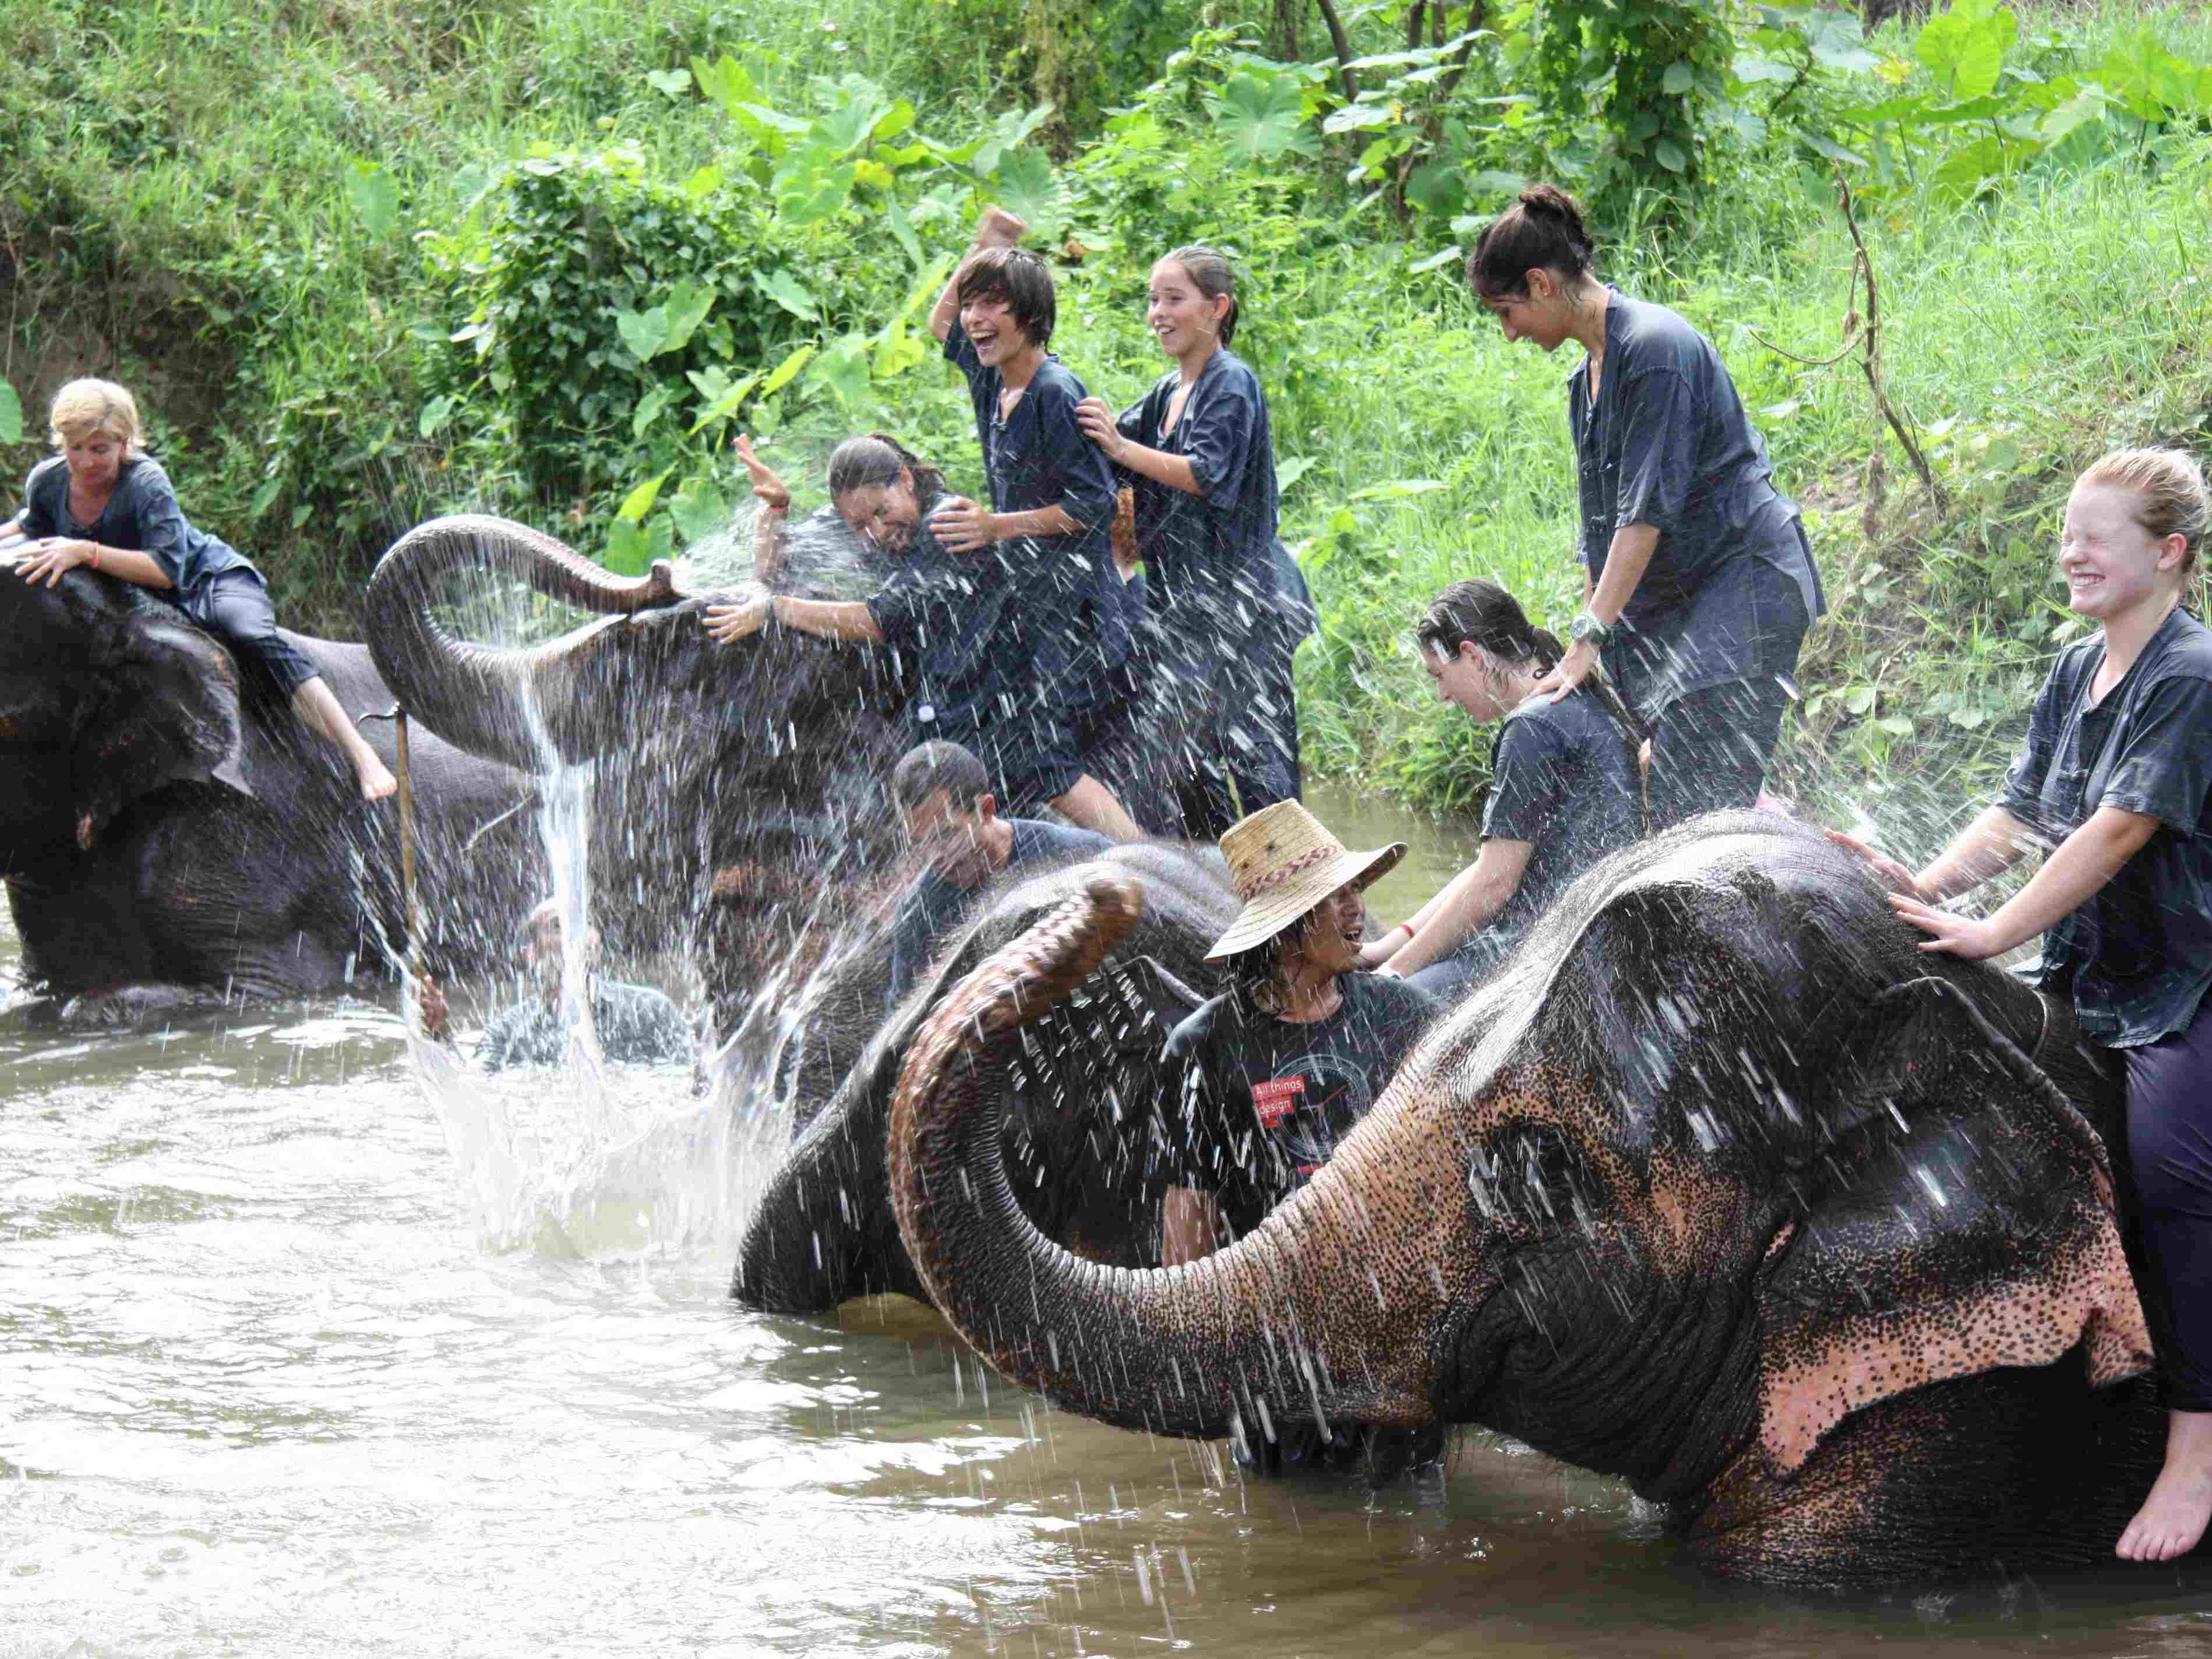 Thajsko, záchranná stanice pro slony, zdroj: CK Marco Polo